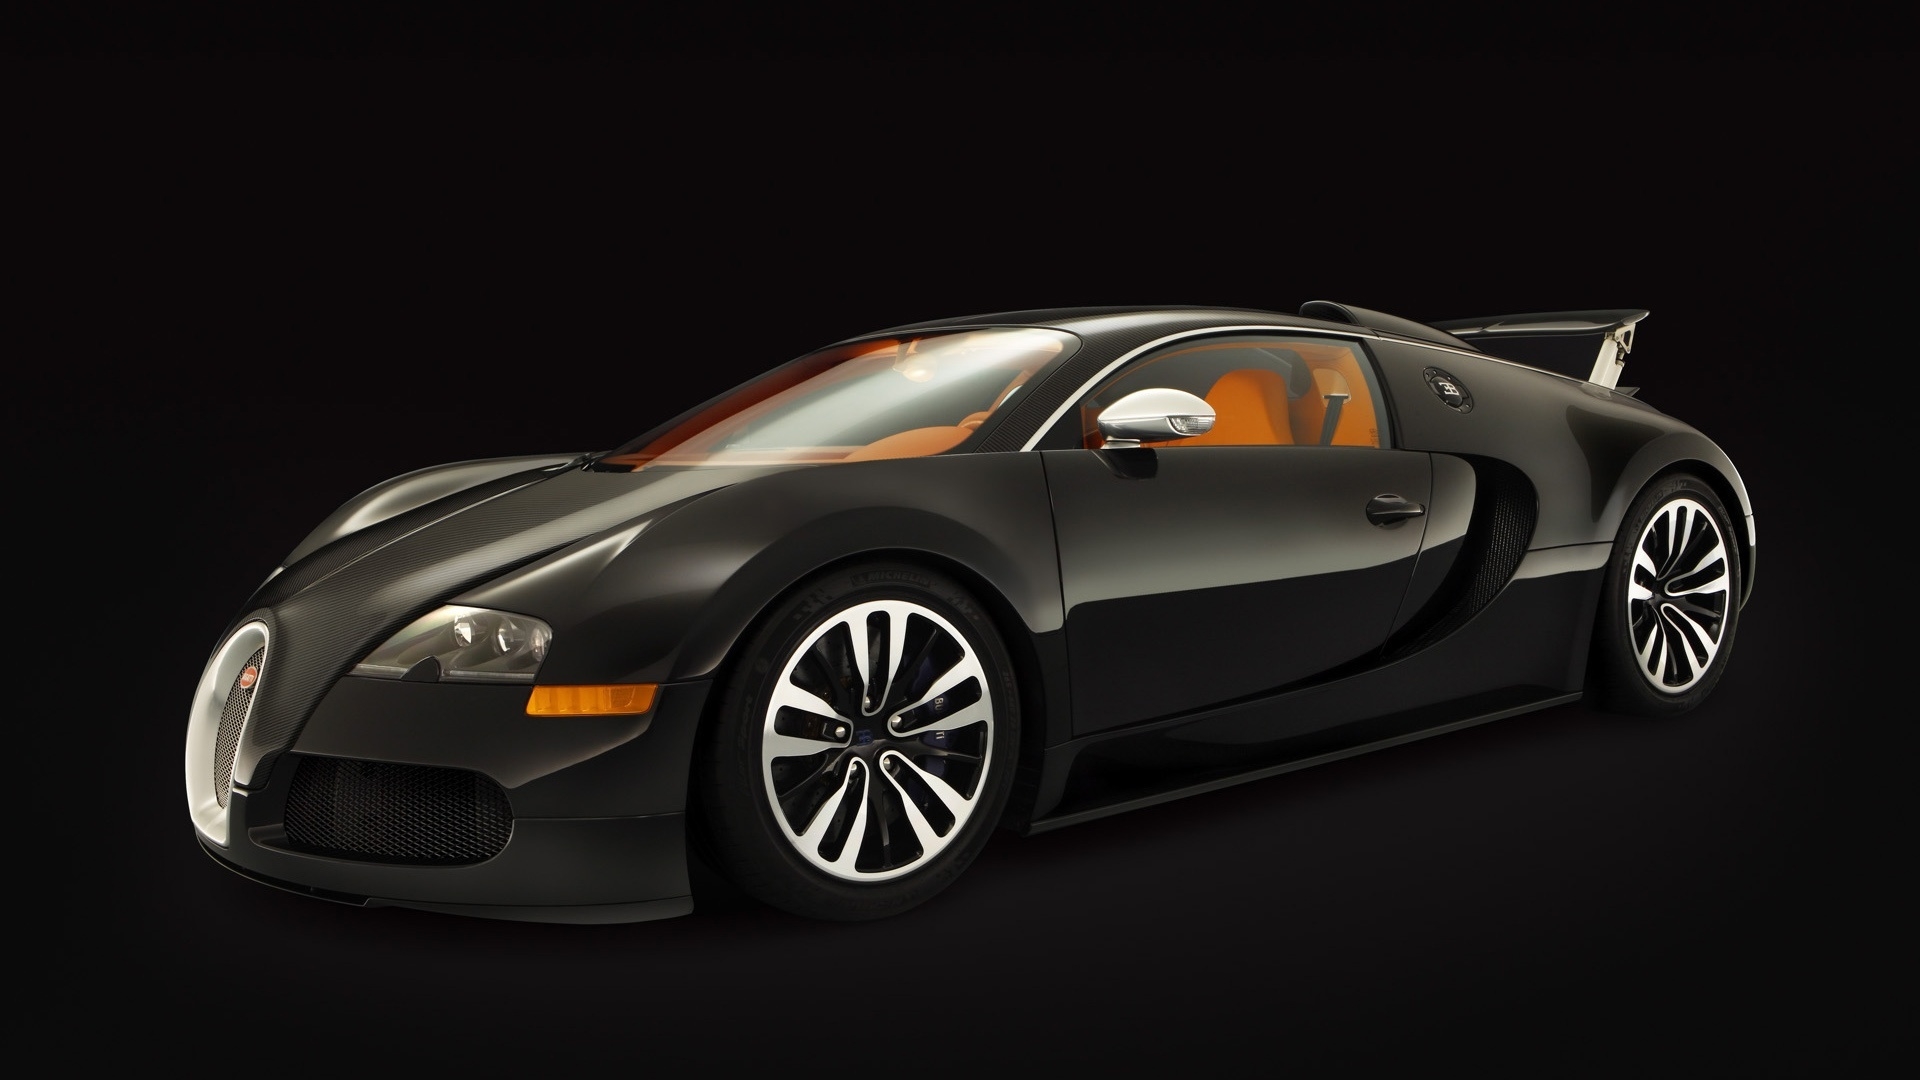 Bugatti Veyron Sang Noir 2008 - Side Angle for 1920 x 1080 HDTV 1080p resolution